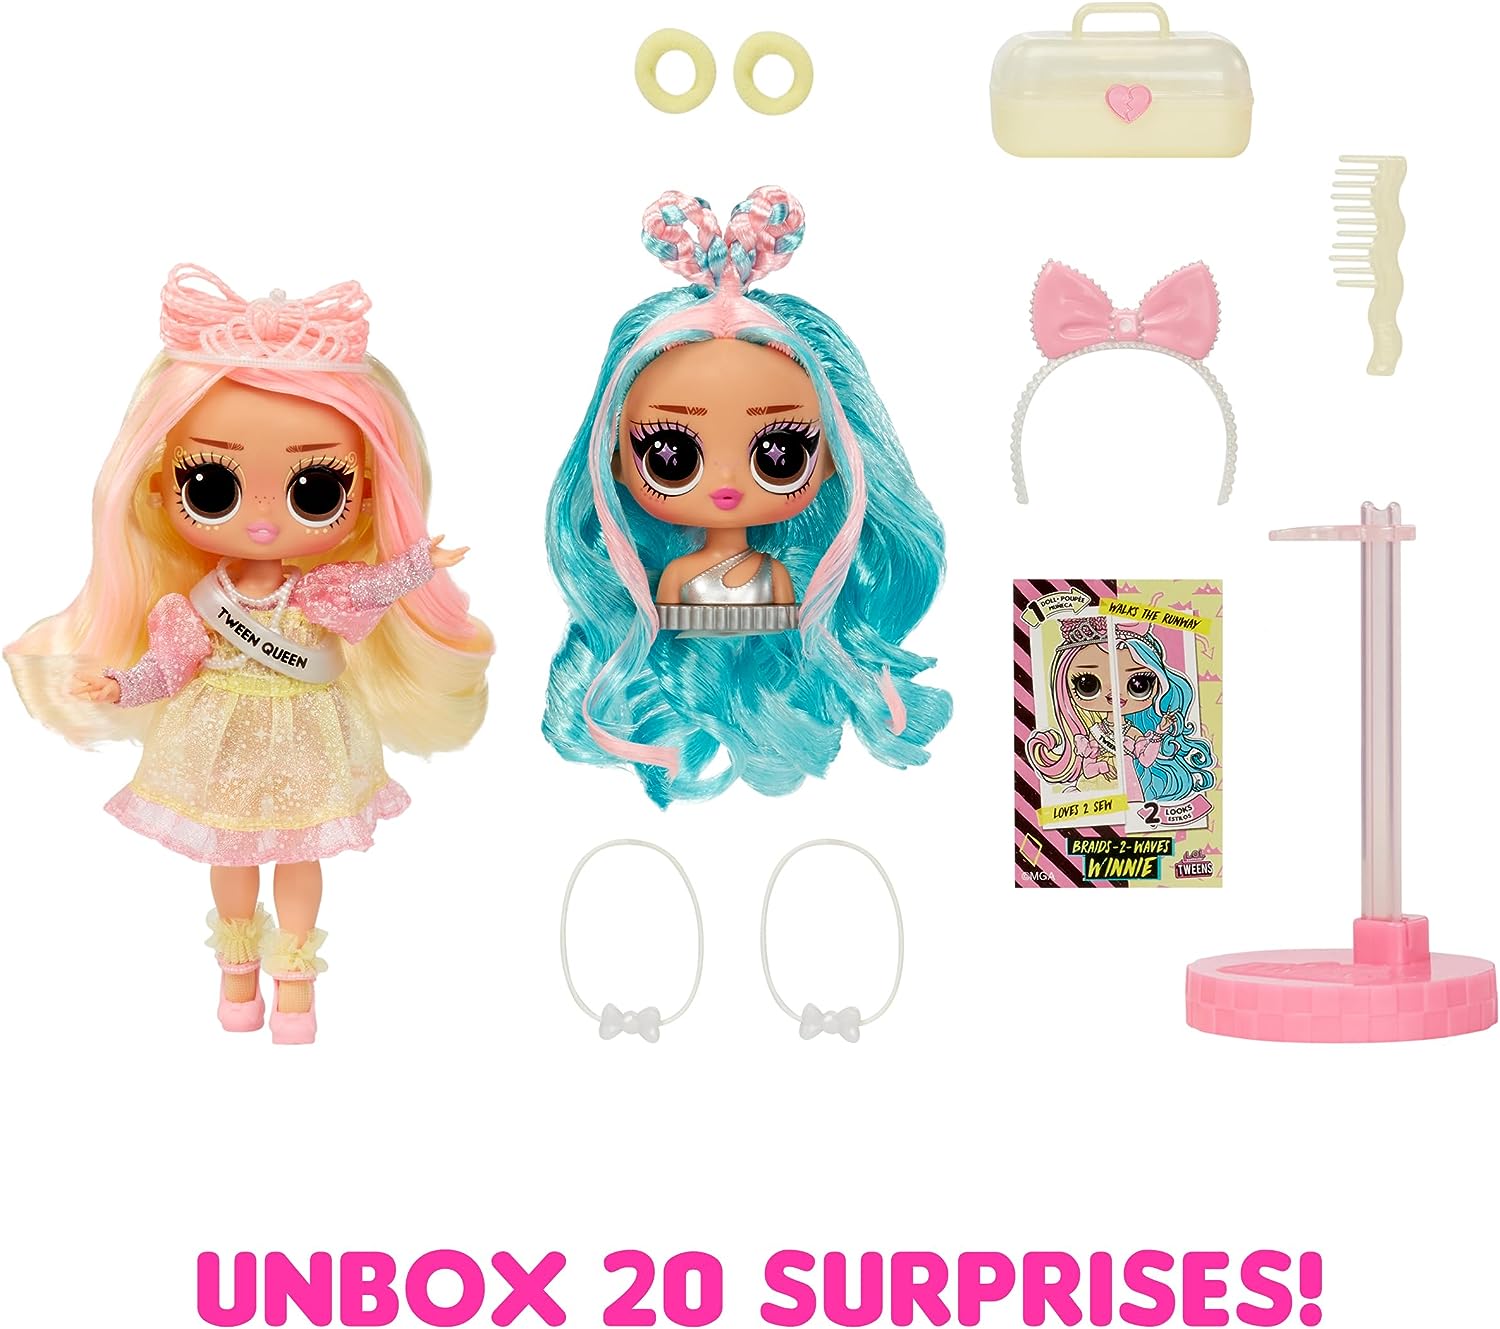 LOL Surprise Tweens Surprise Swap dolls with replaceable heads 